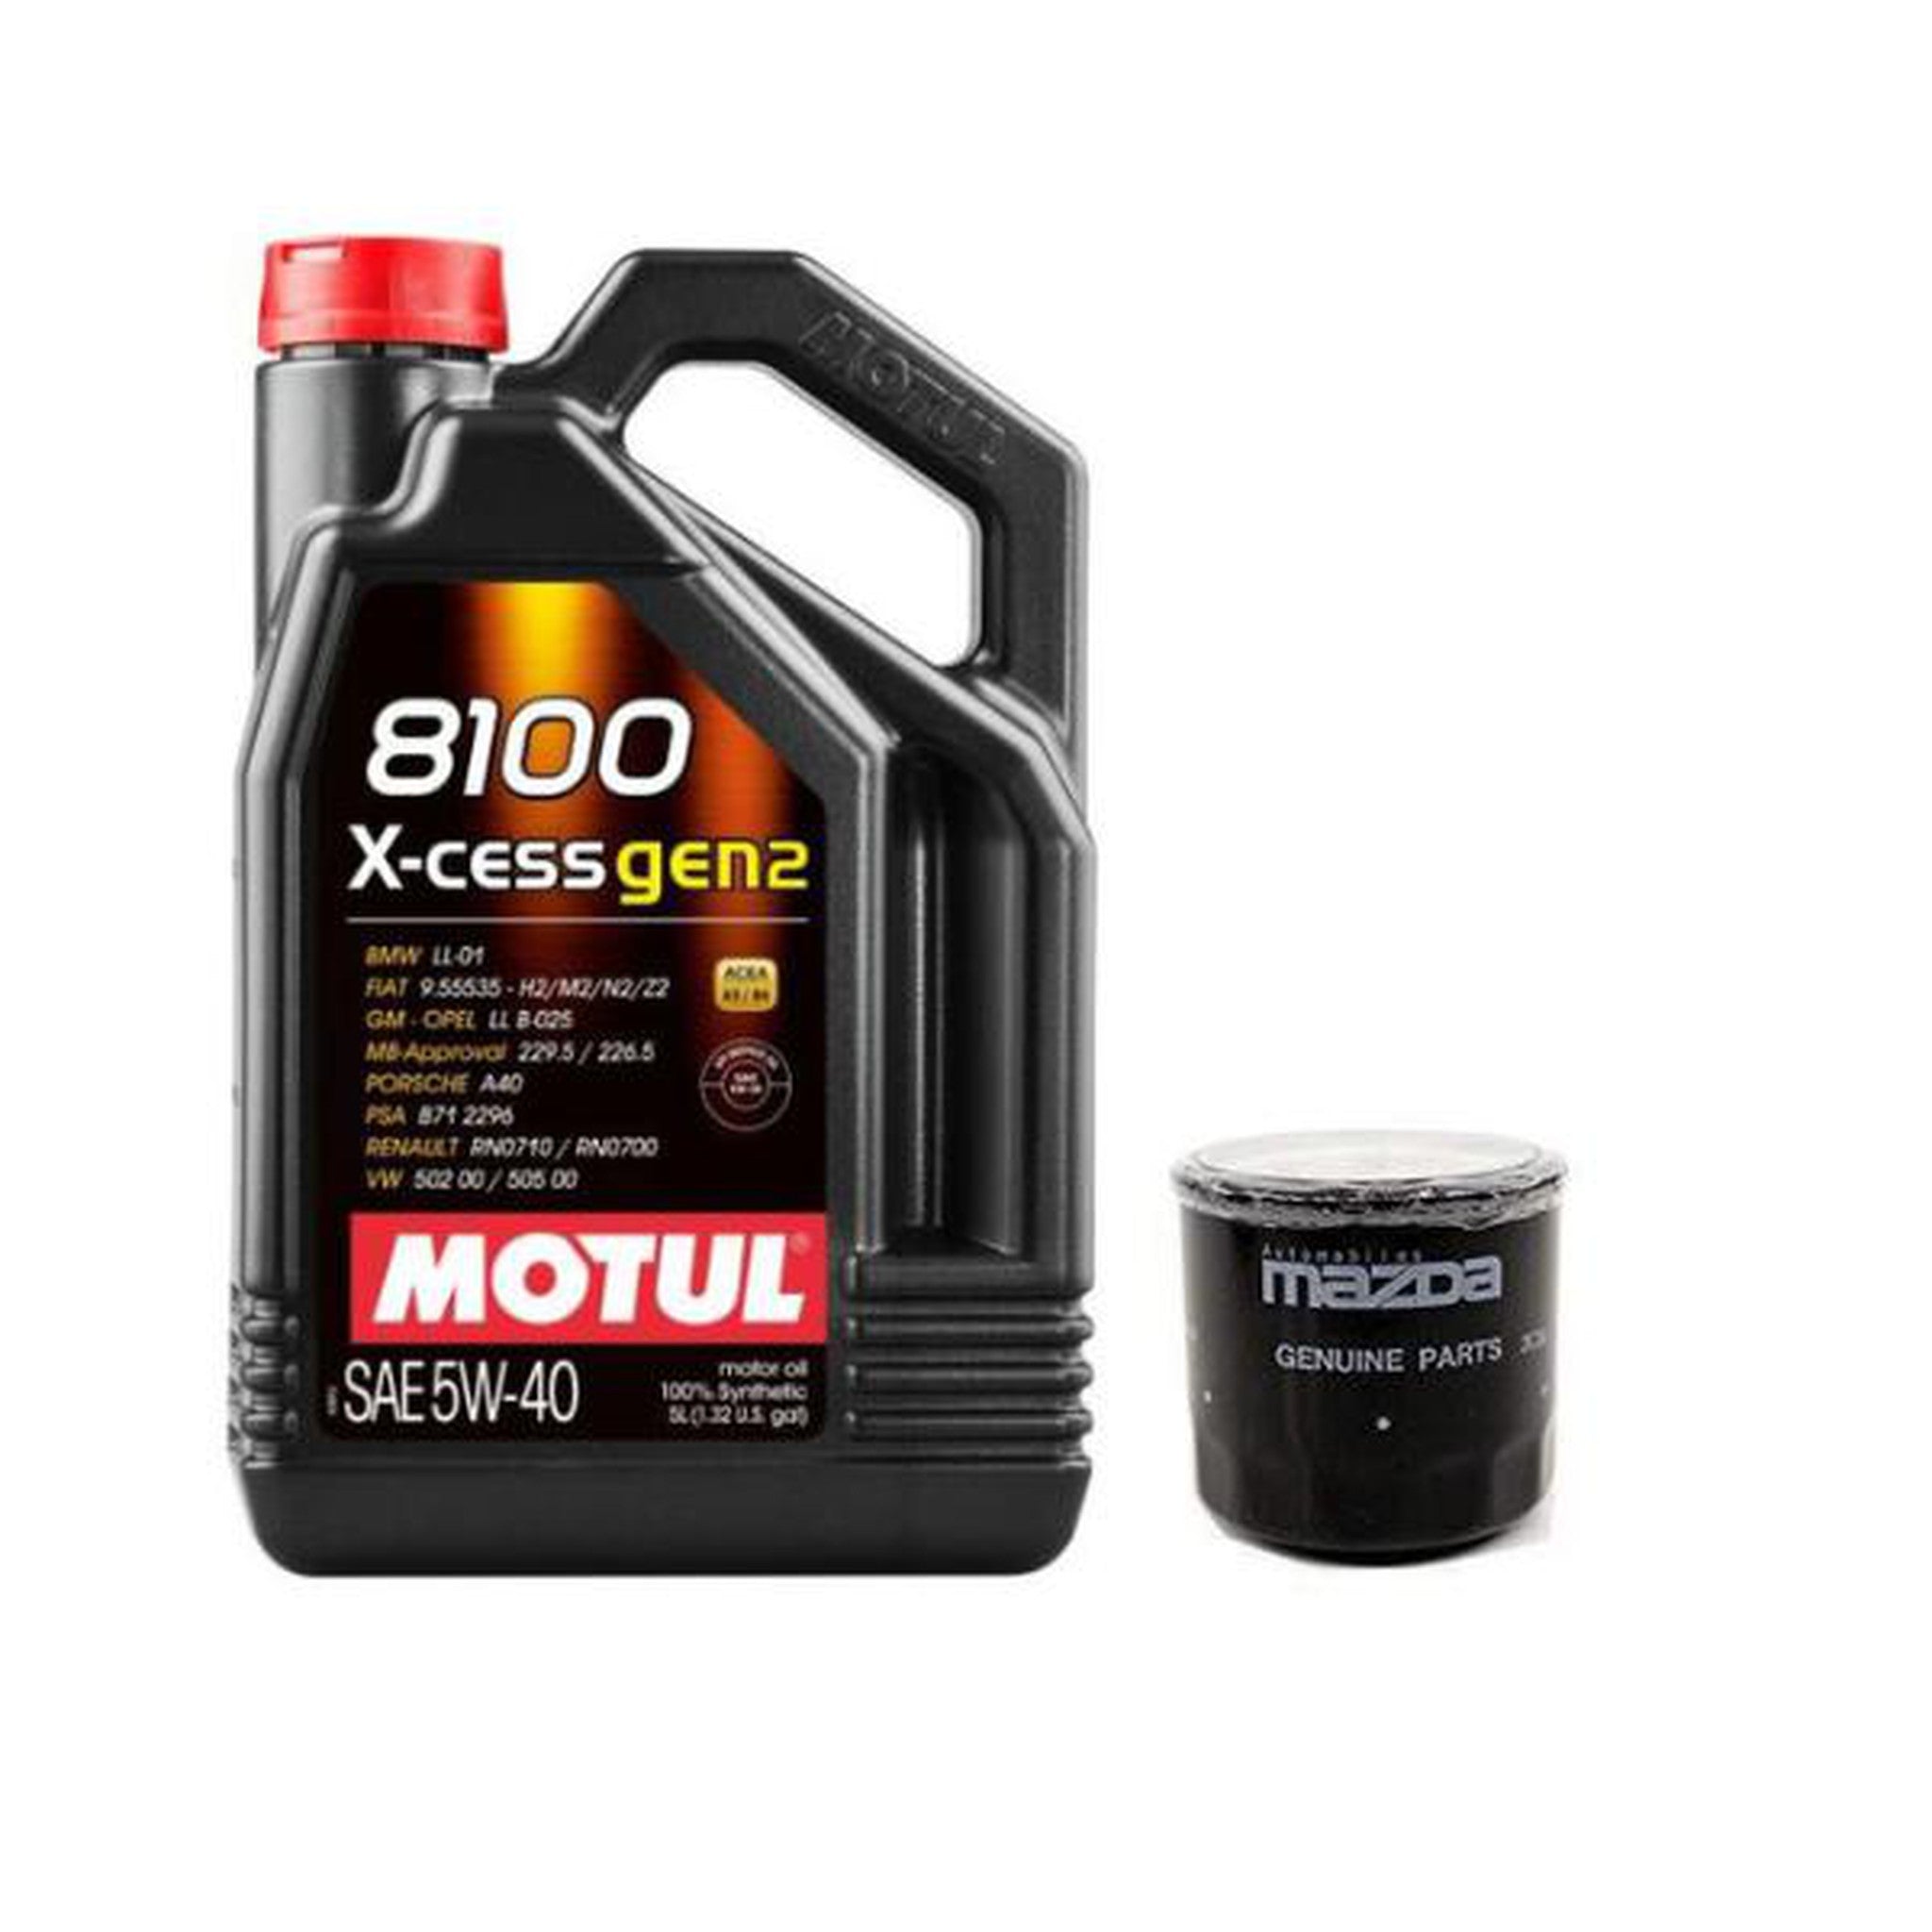 Motul 8100 5w40 X-CESS Gen 2 + Mazda Filter Oil Change Kit Subaru WRX –  Import Image Racing